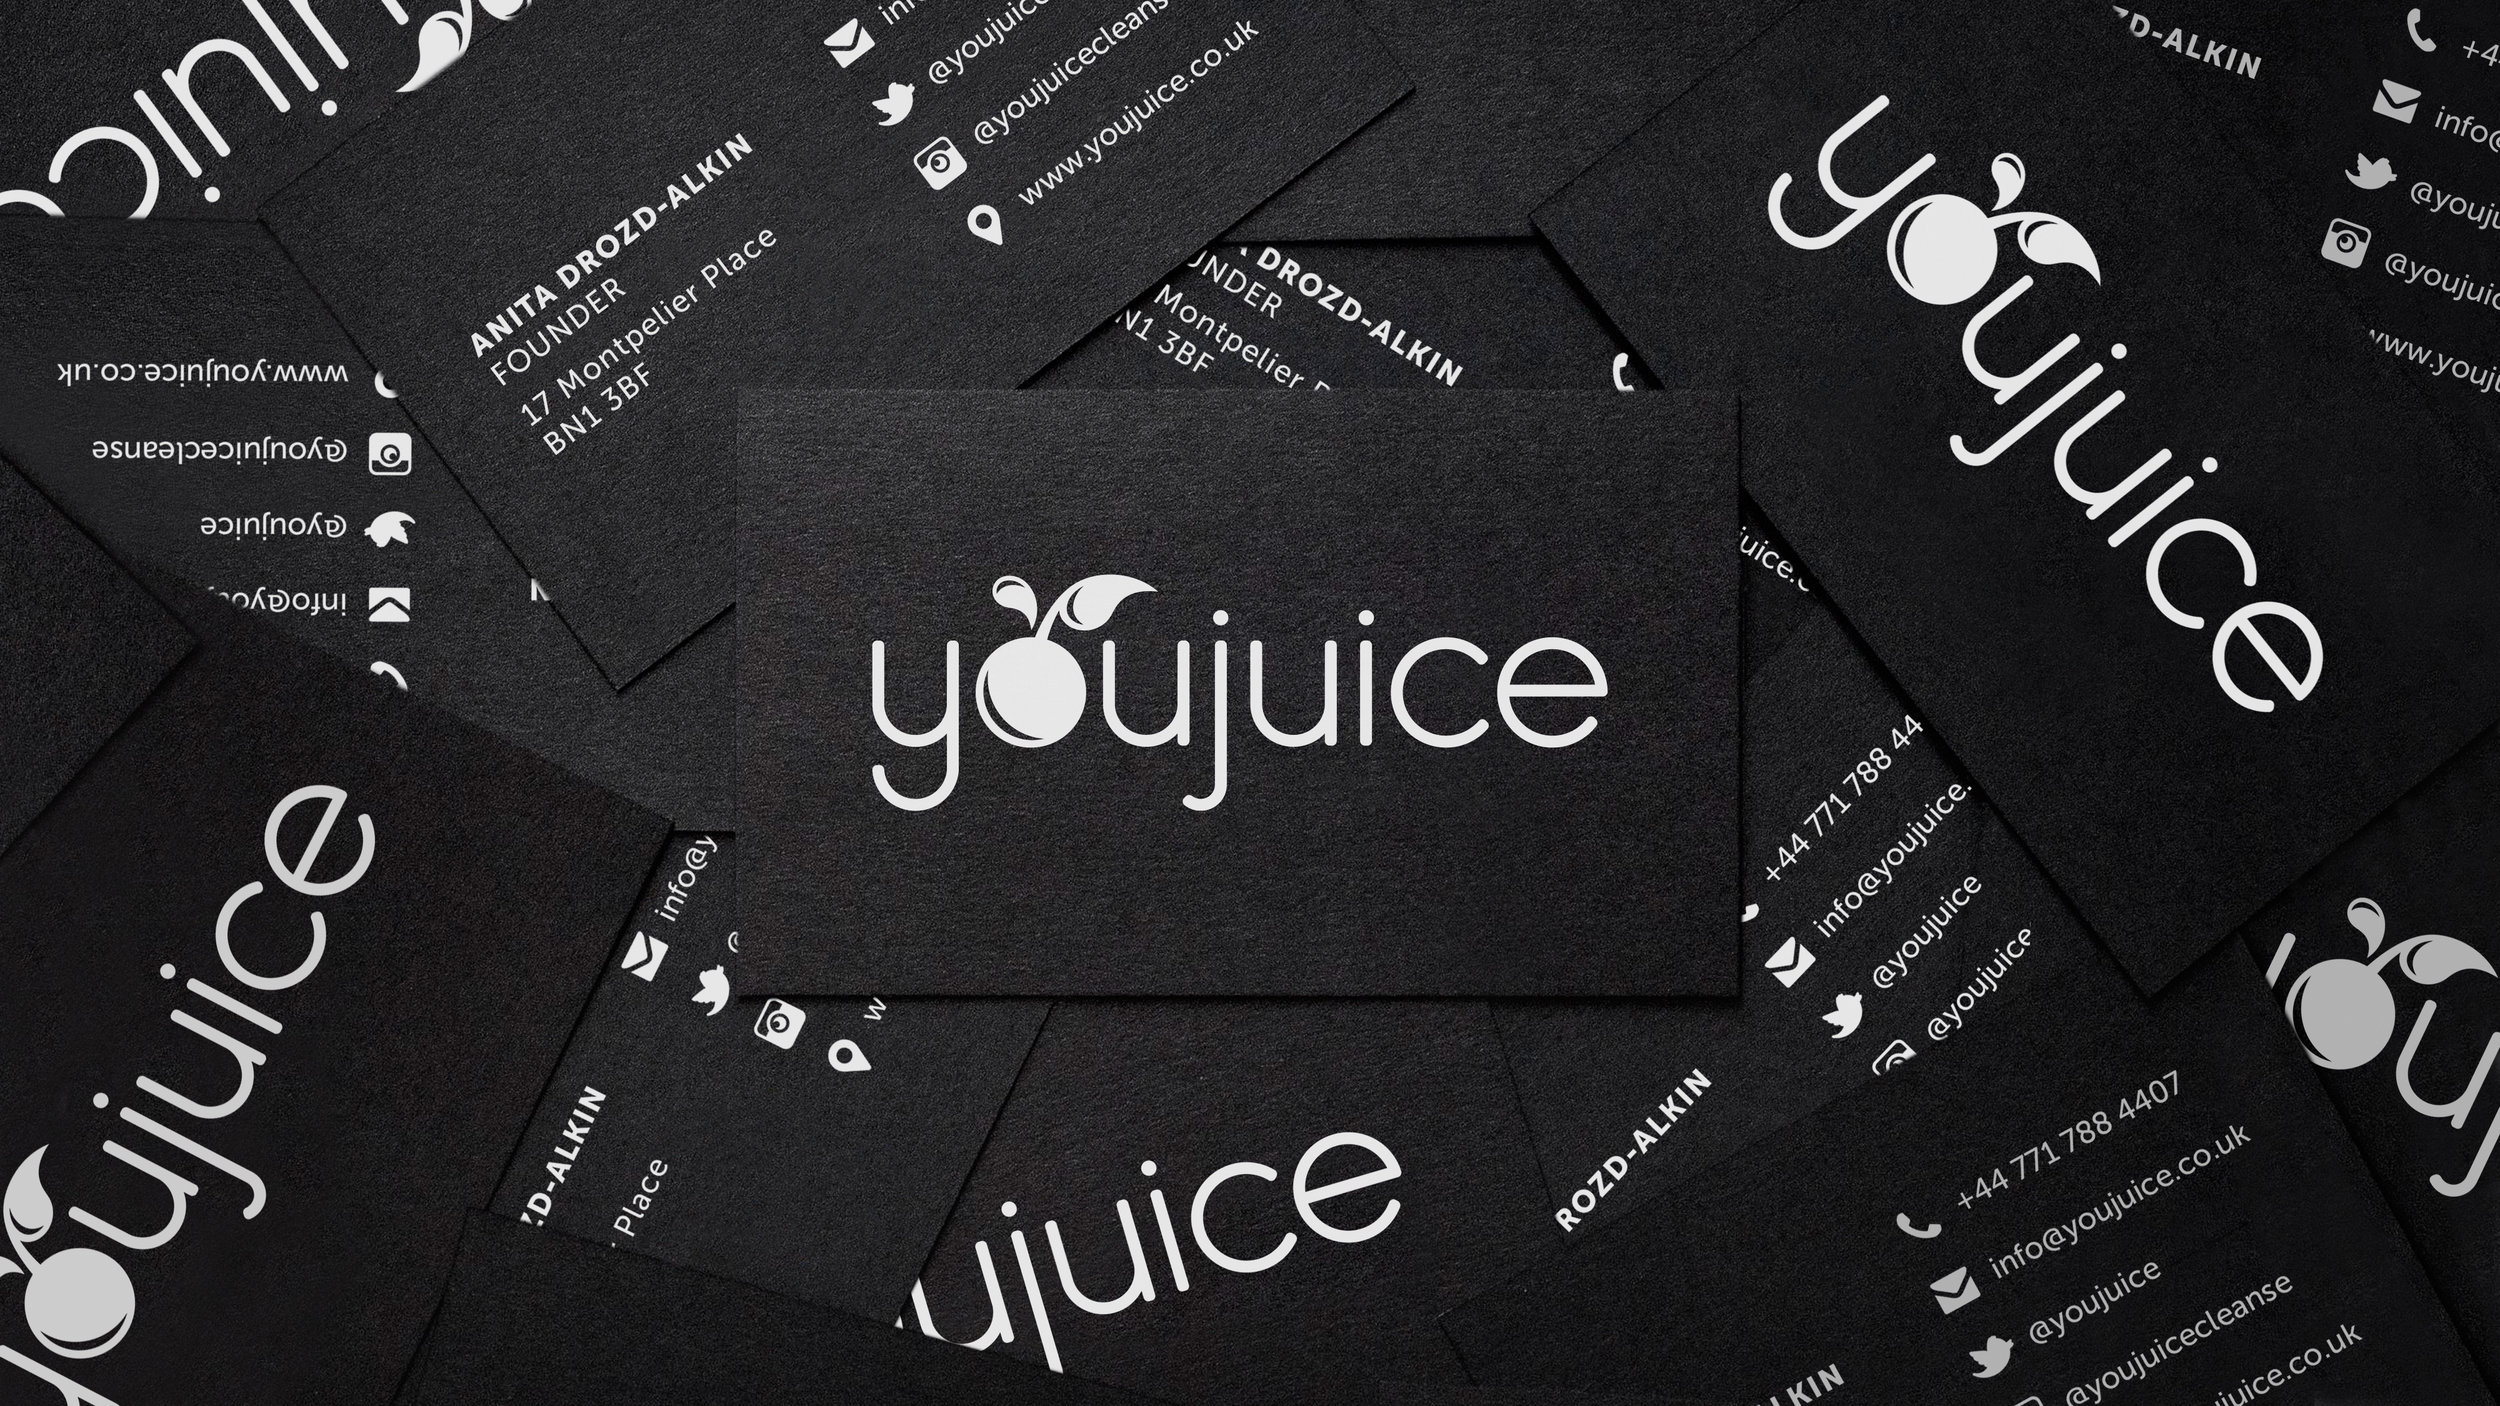 Brand_republica_logo_design_youjuice_business_cards.jpg